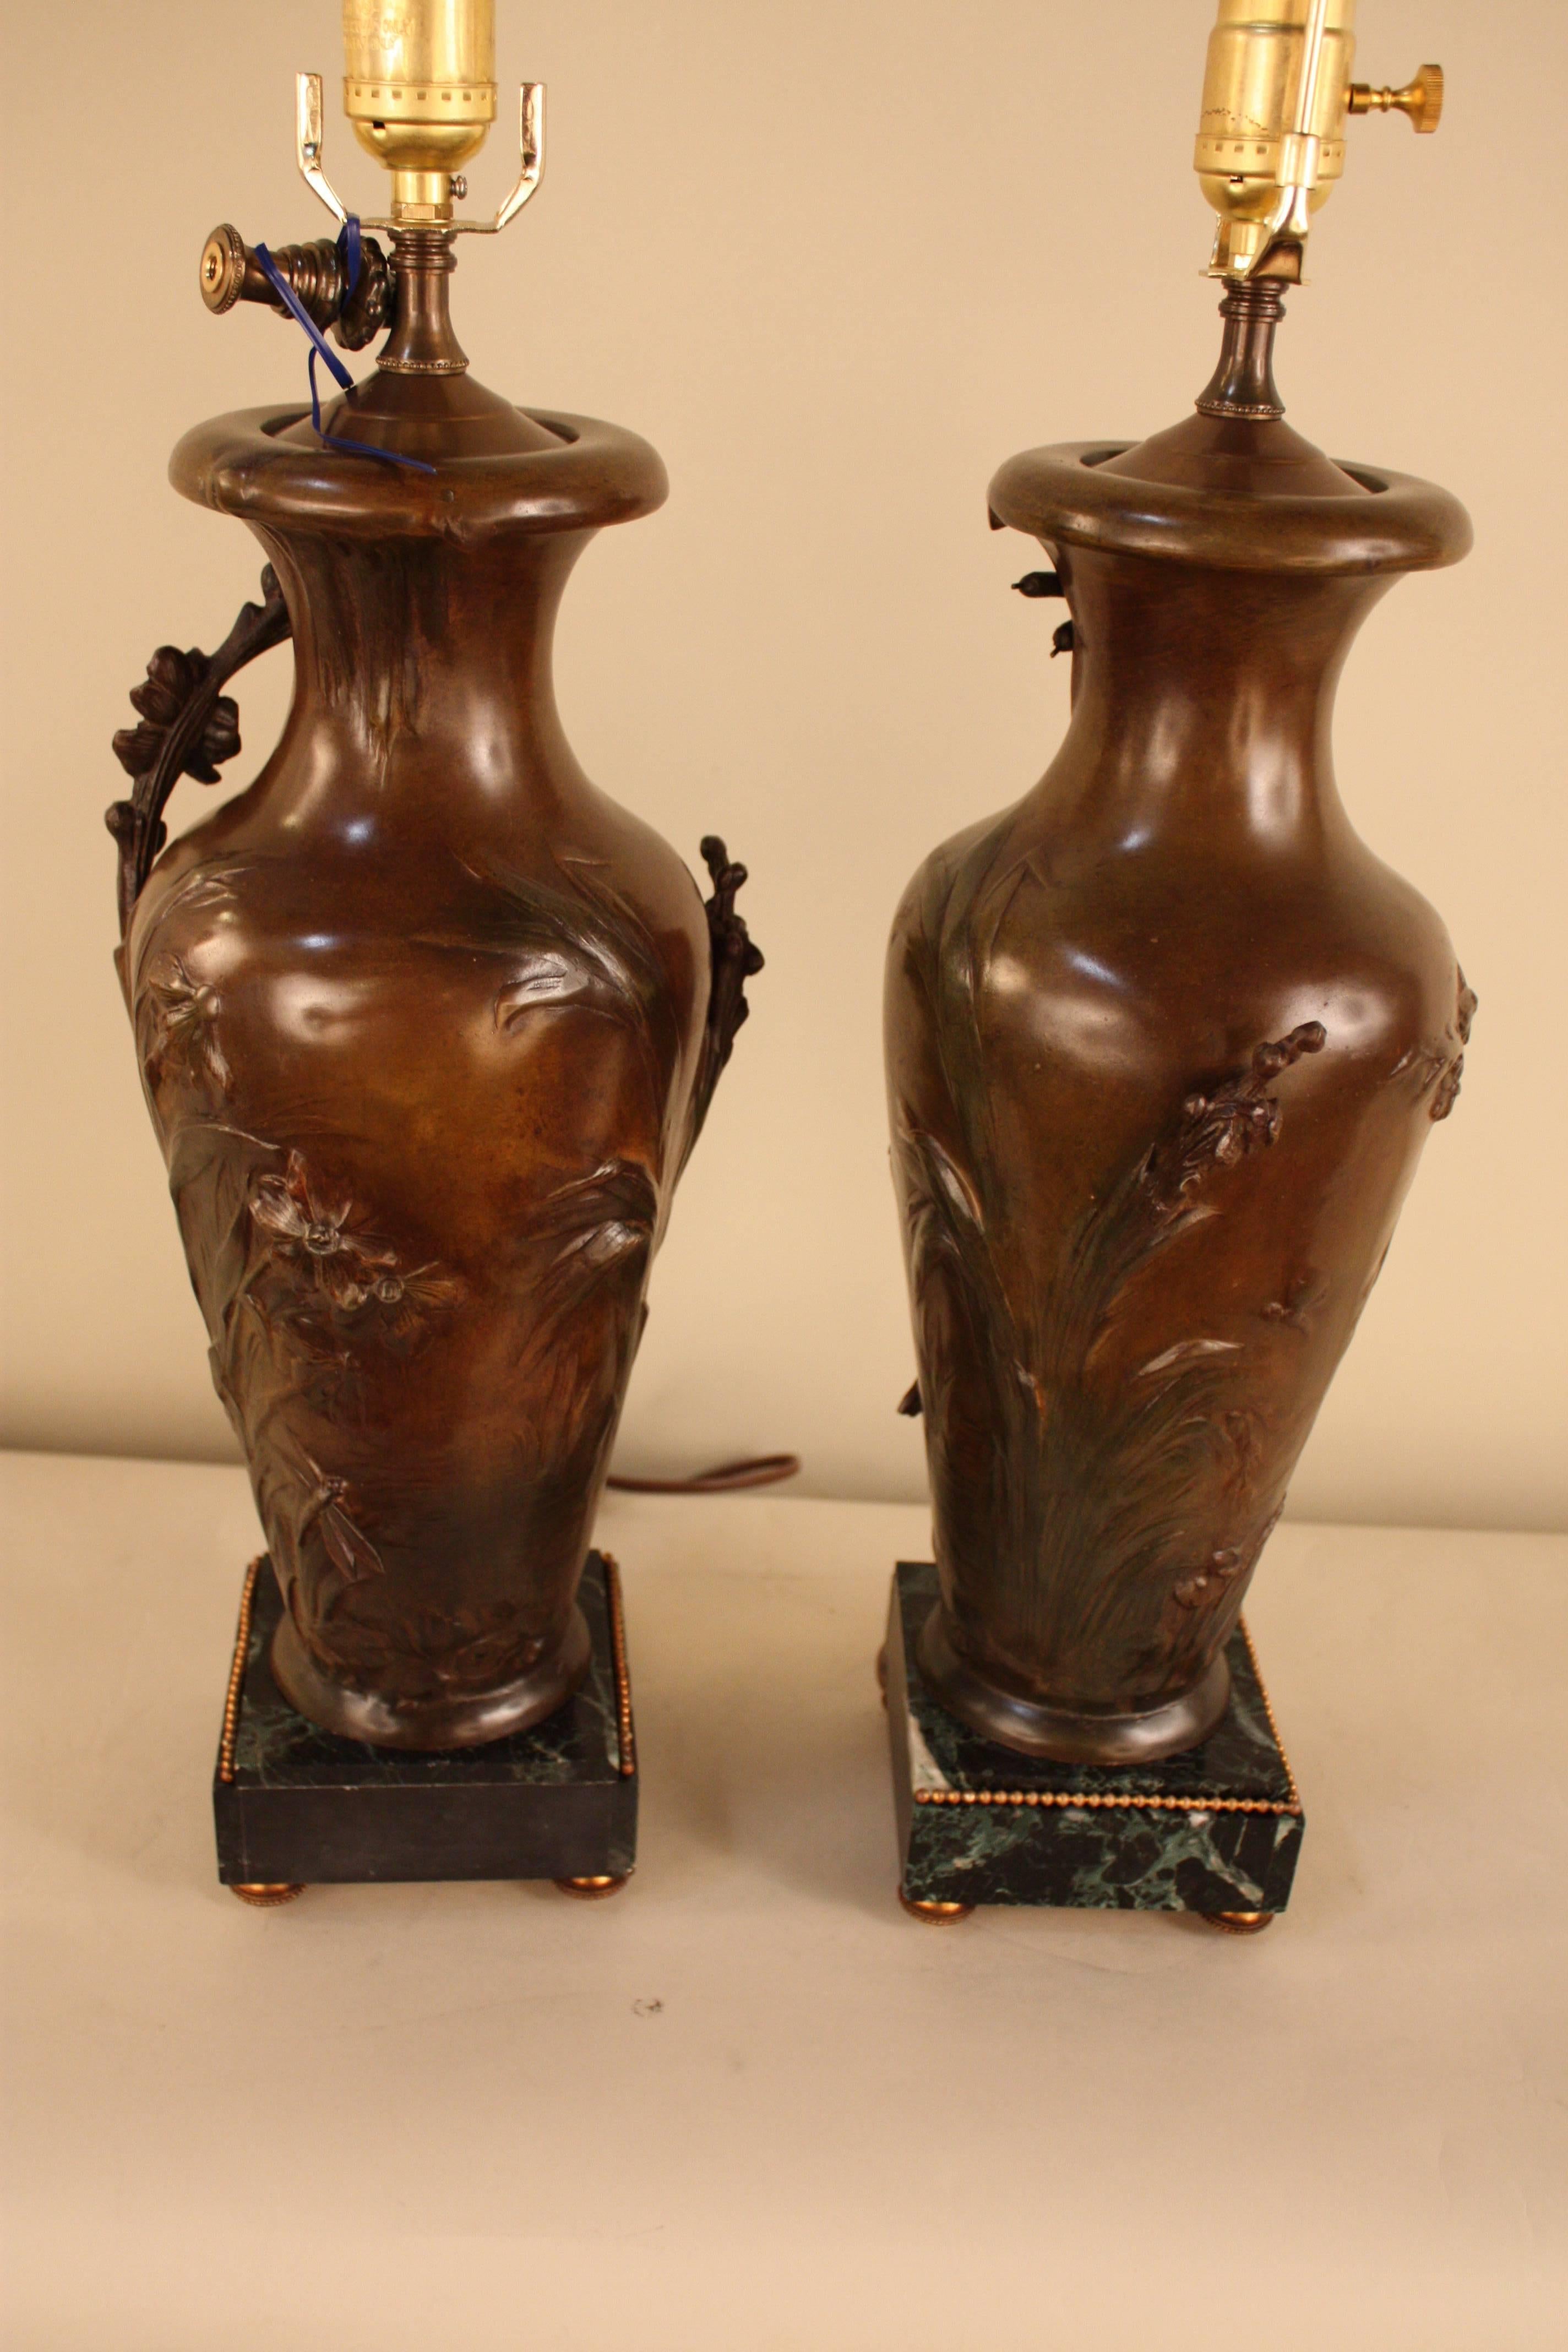 Pair of flora Art Nouveau urns that electrified as table lamps by Auguste Moreau and Fabrication Francaise Paris.